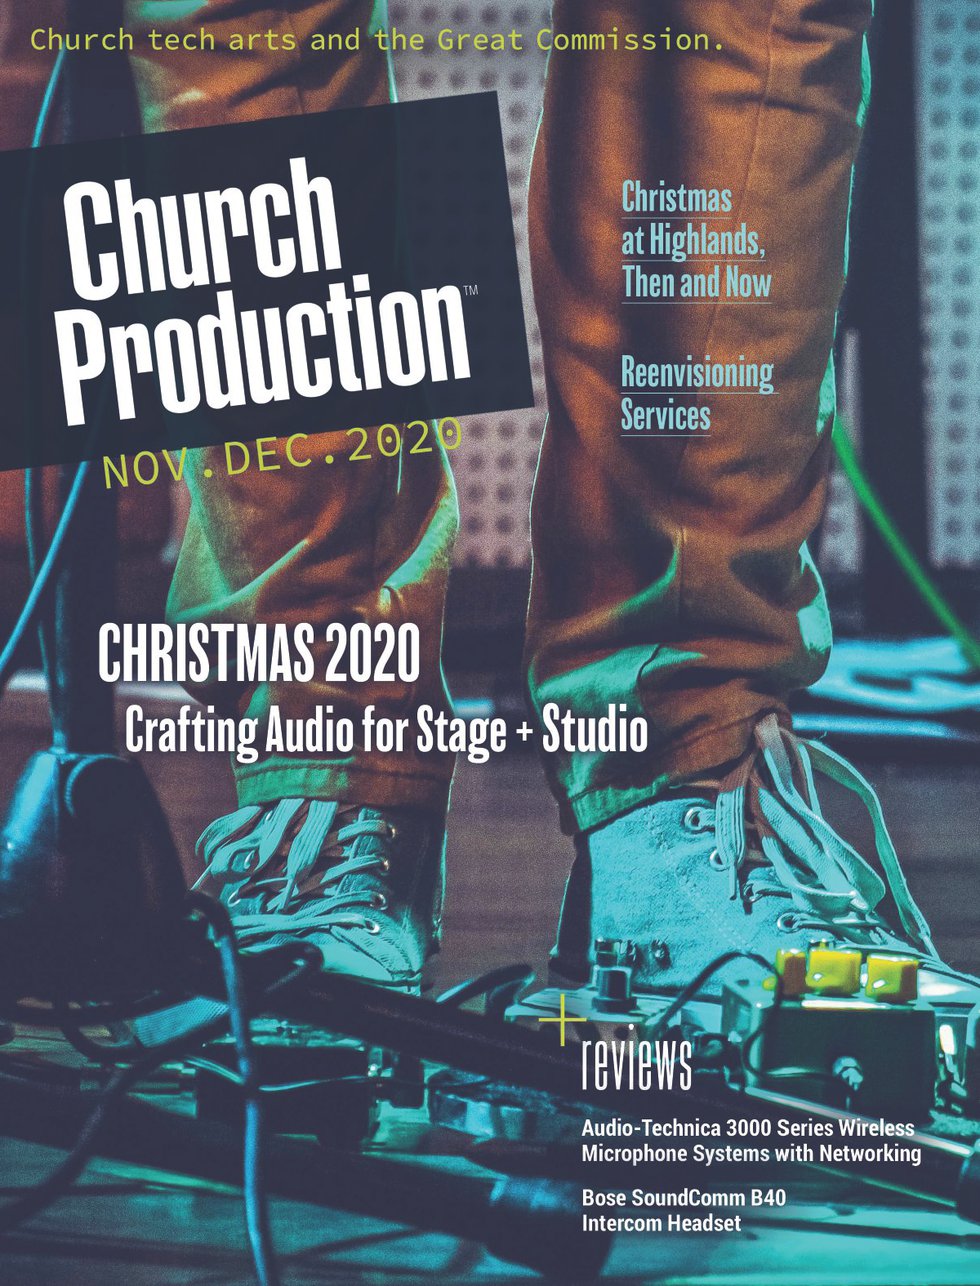 Church Production NovDec 2020 Cover